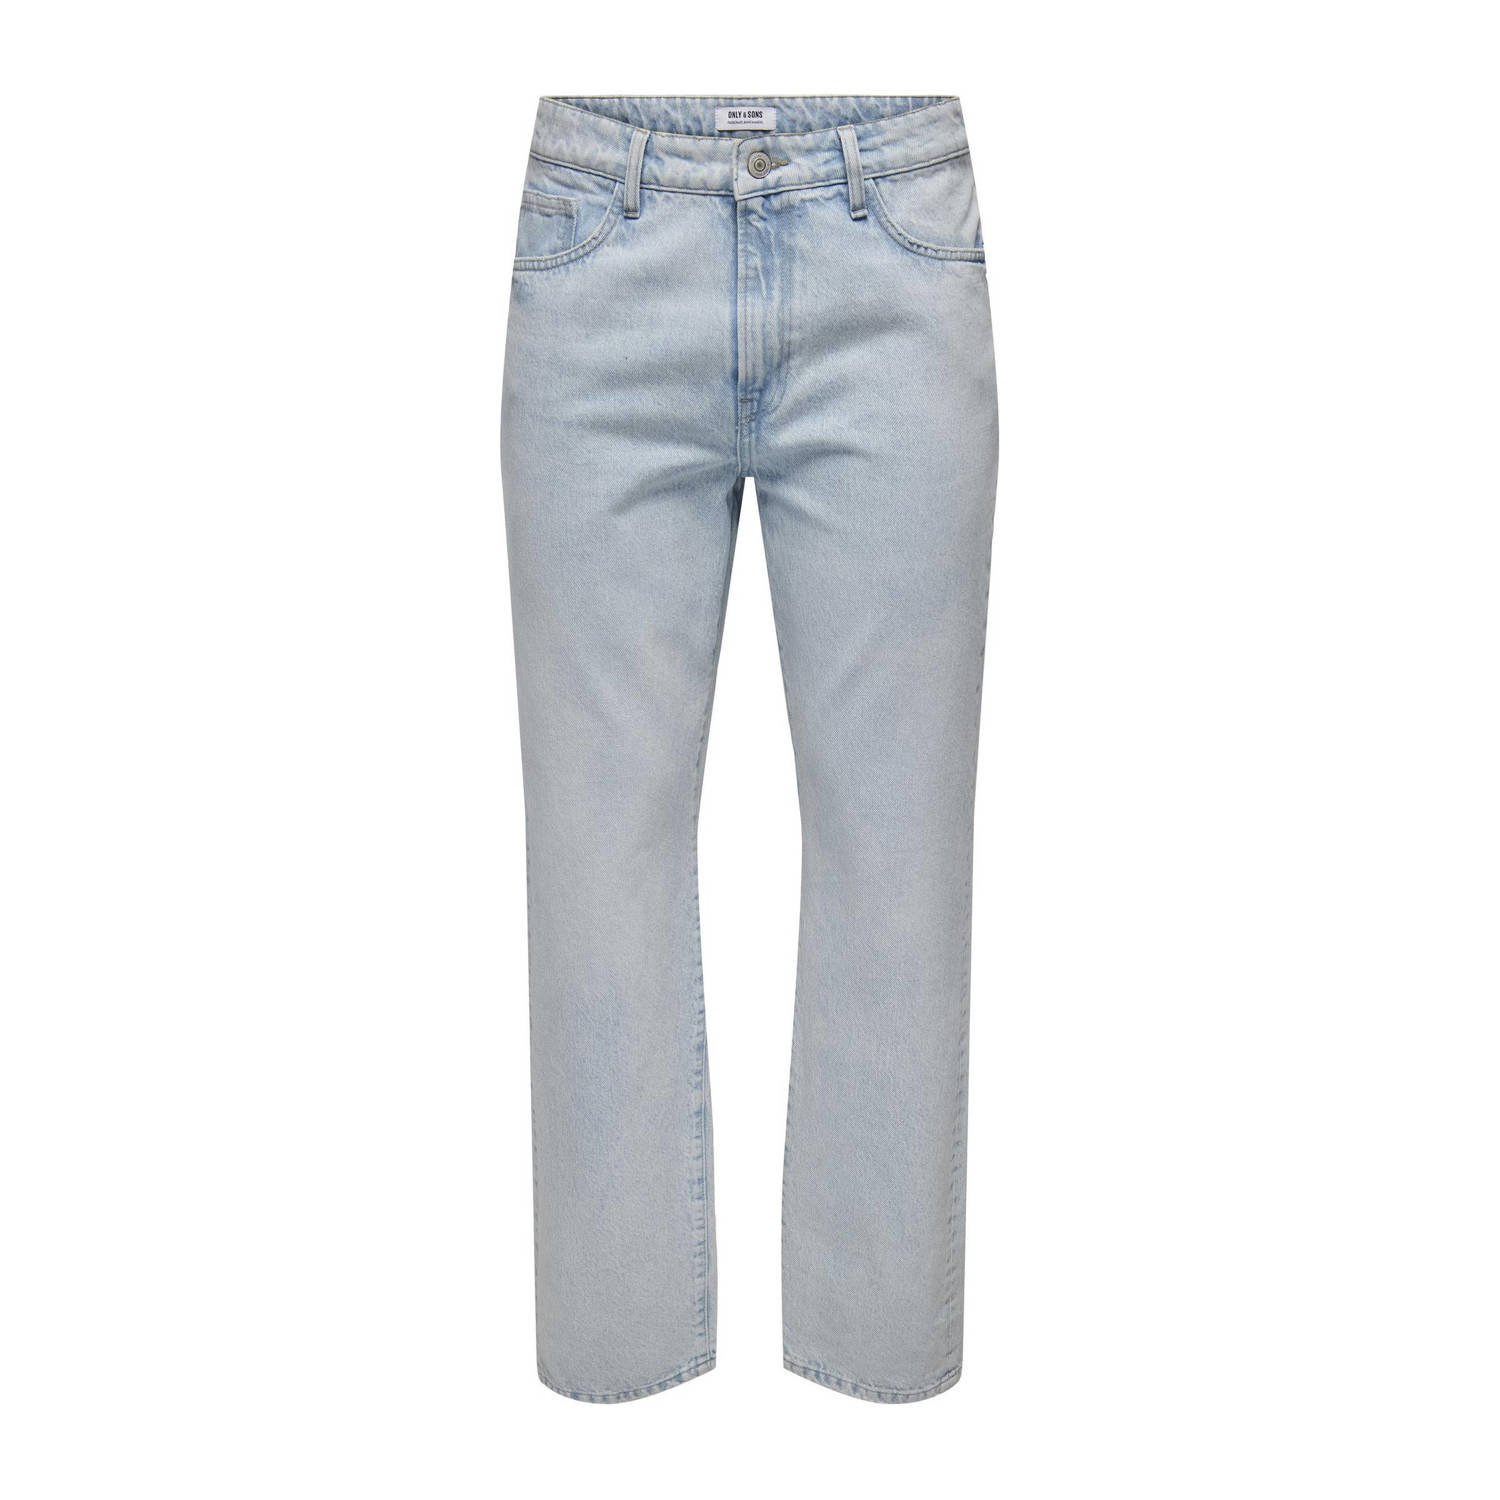 ONLY & SONS straight fit jeans ONSEDGE light blue denim